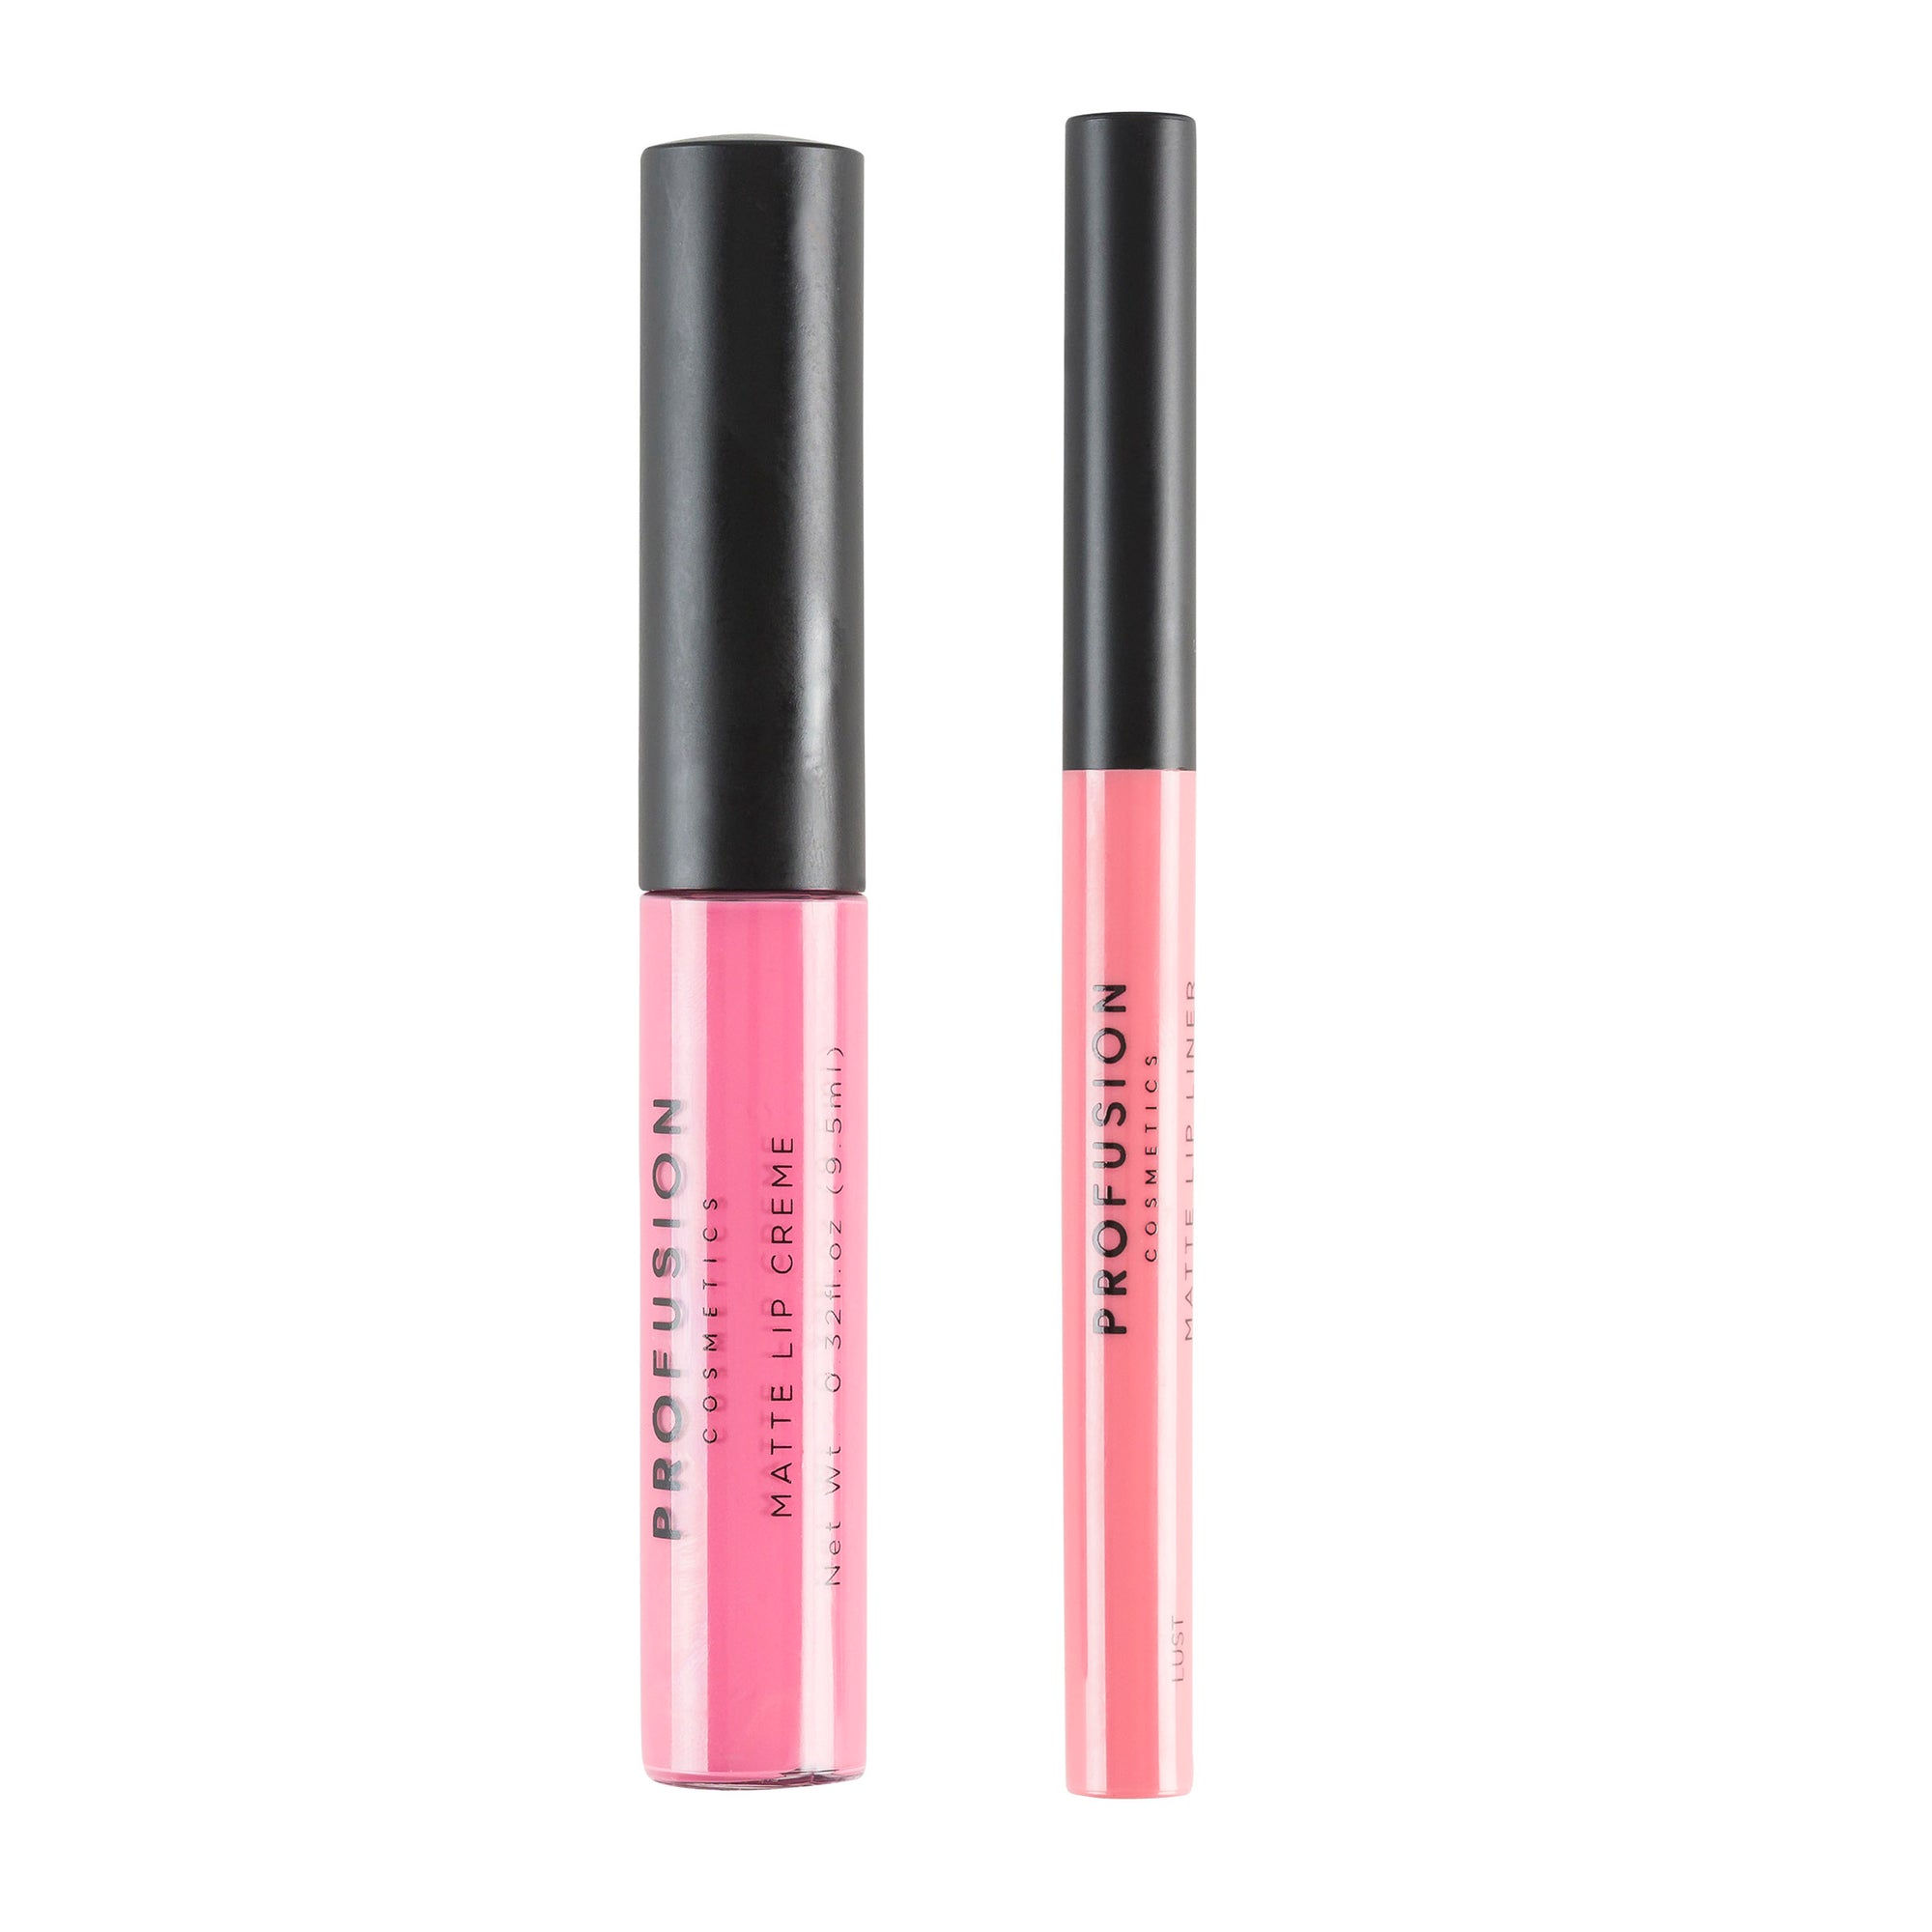 Profusion Lip Duo - Shop For Lip Kits Online! - Profusion Cosmetics